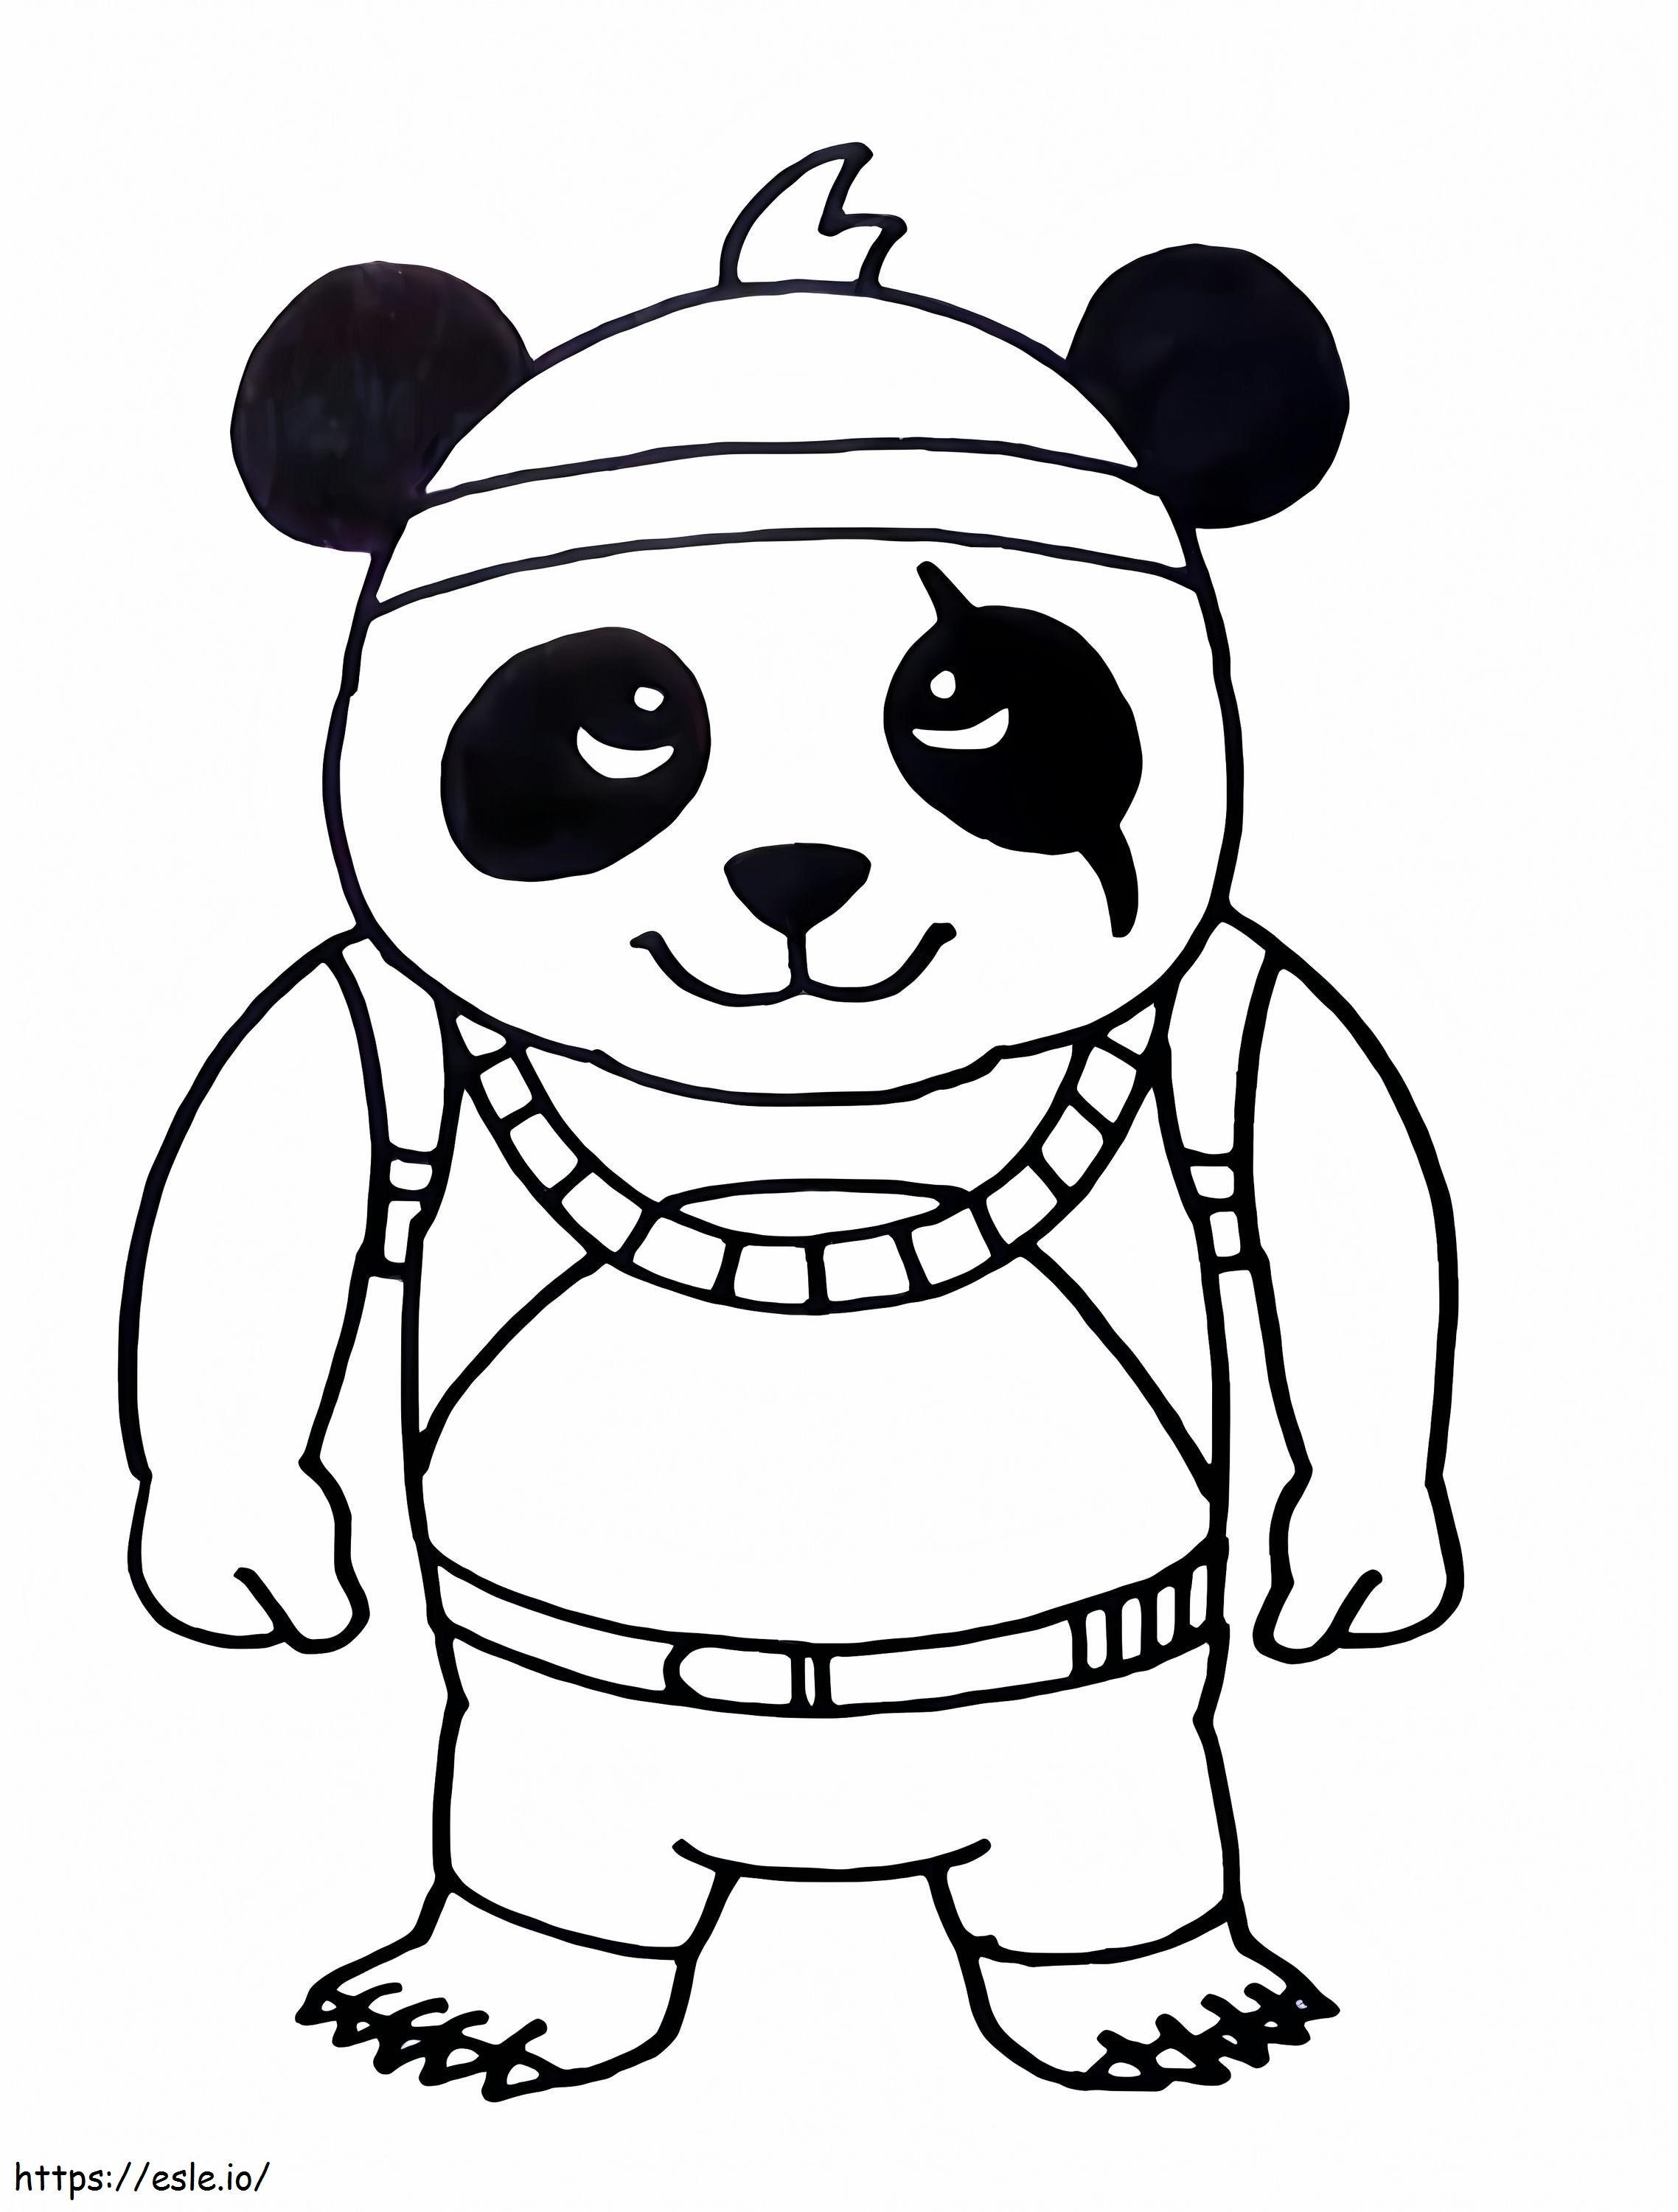 Detetive Panda Free Fire para colorir